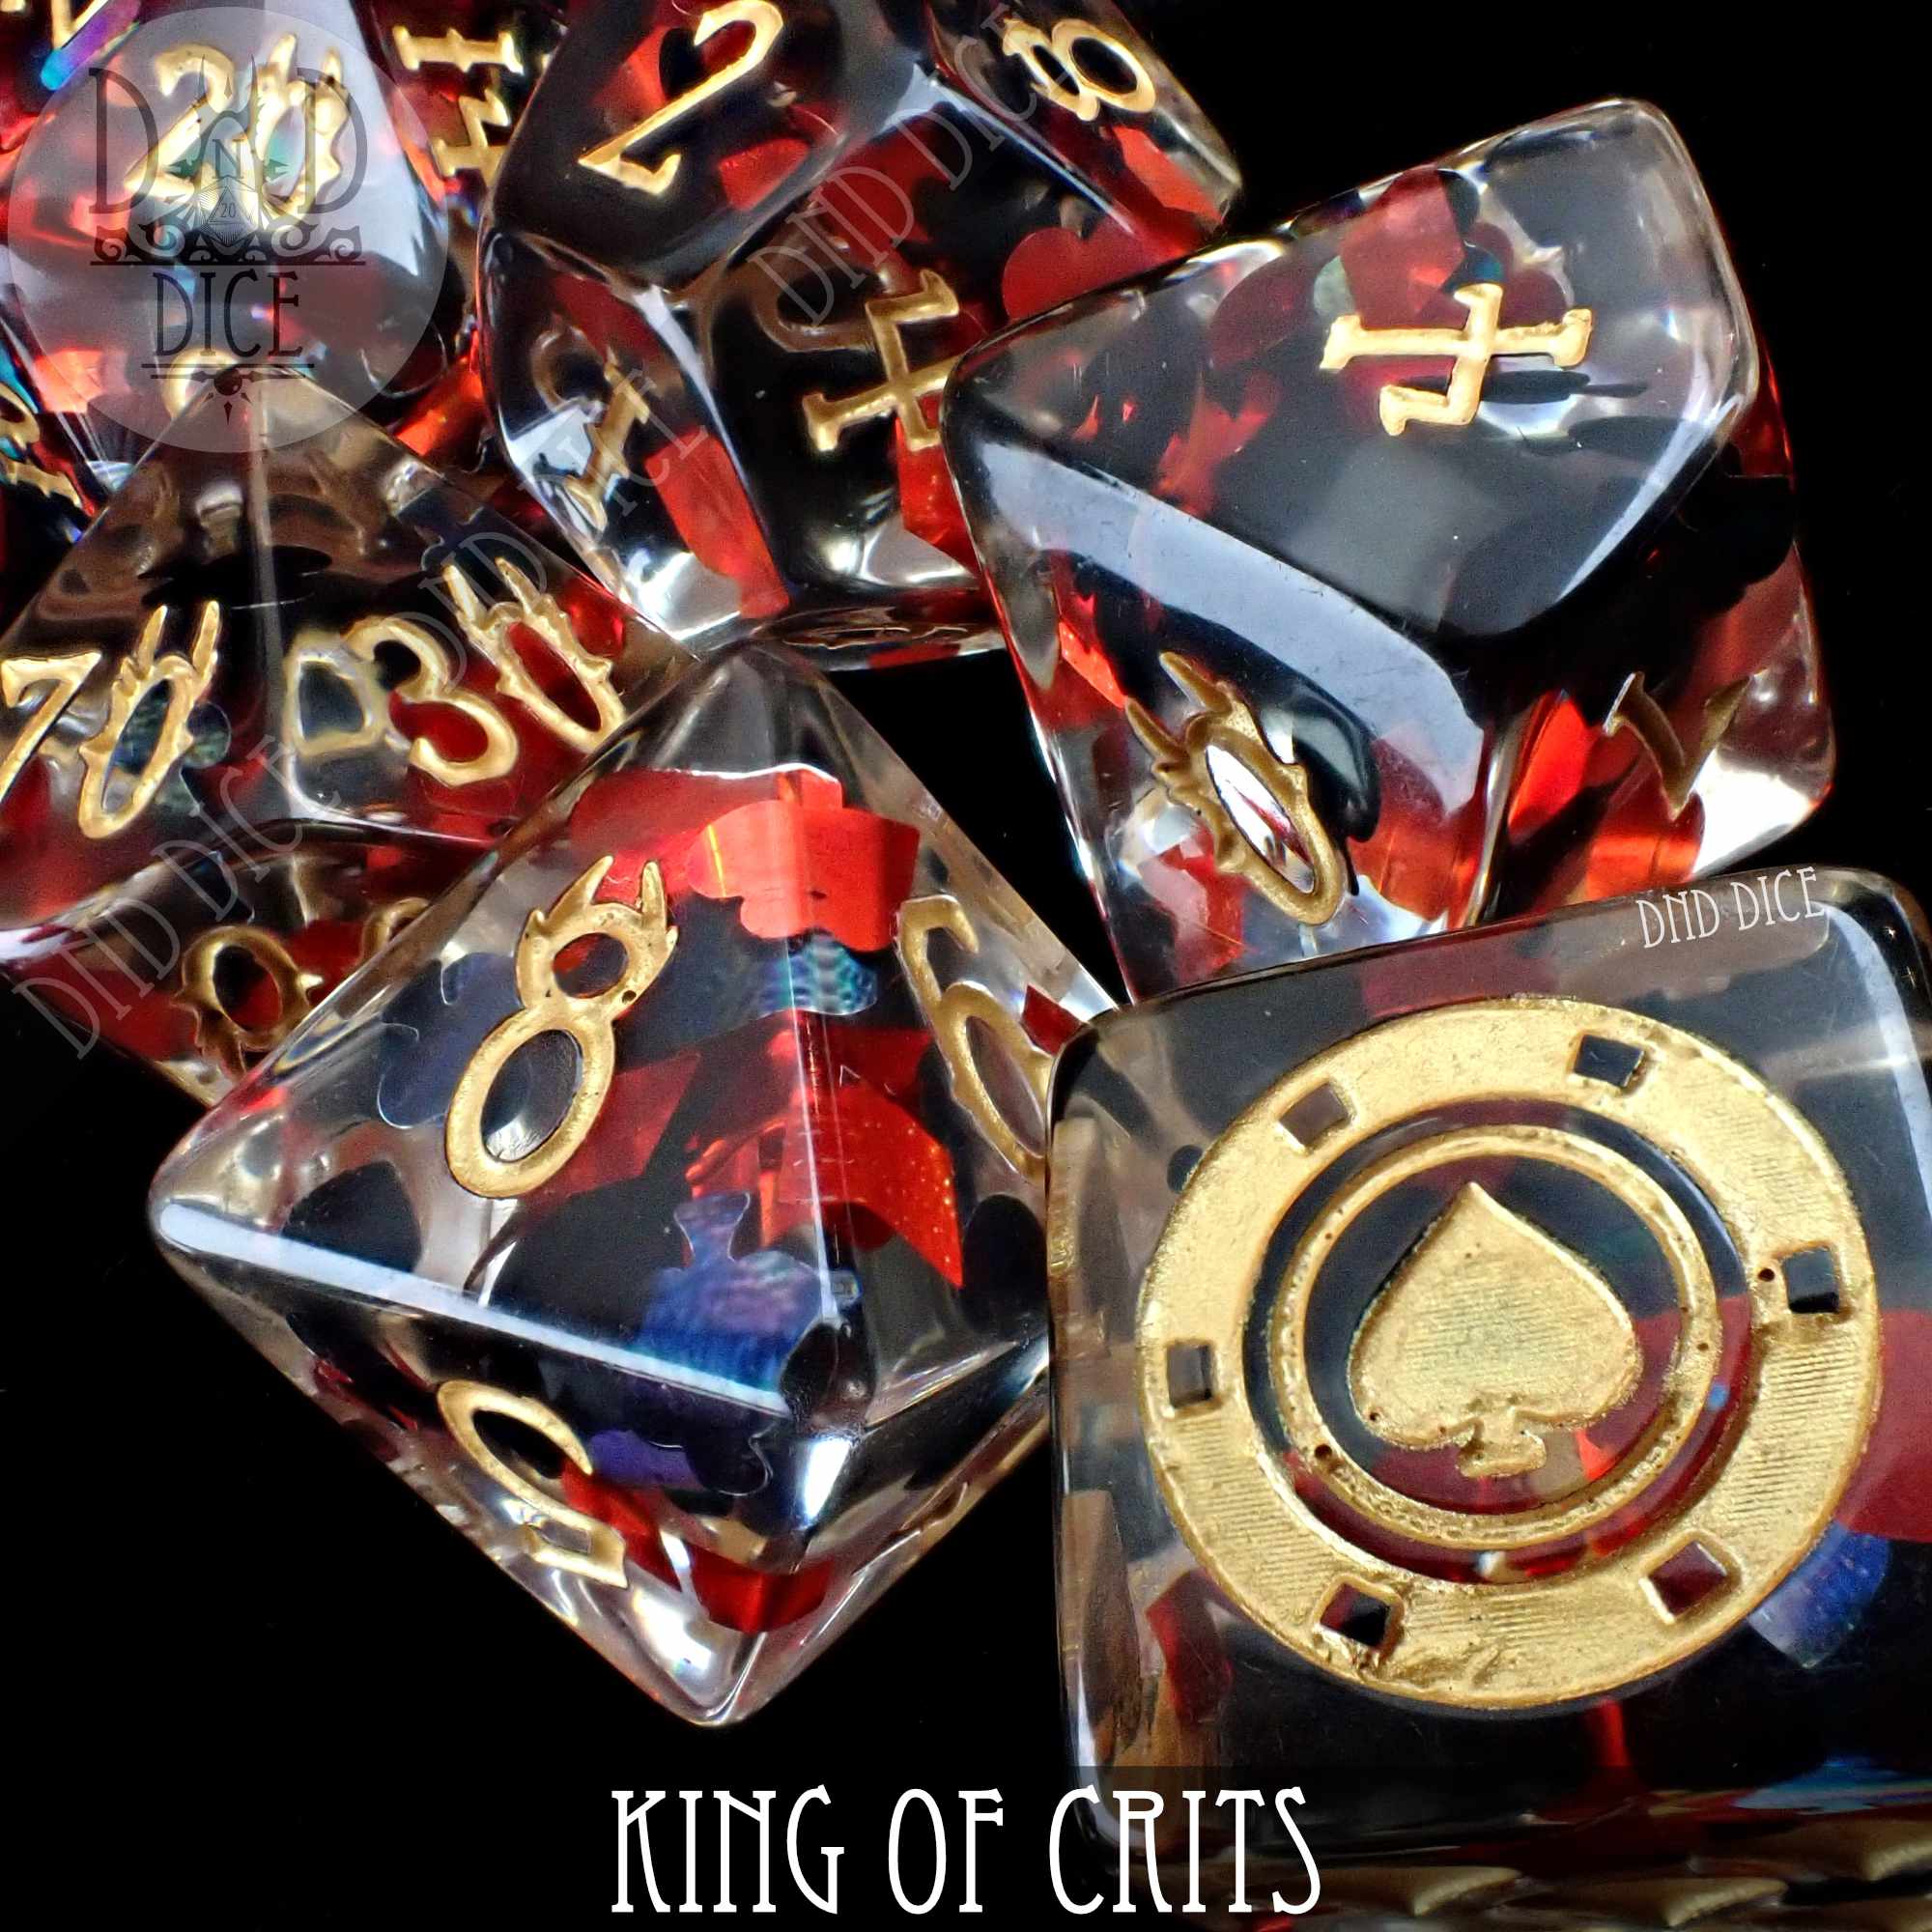 King of Crits - 11 Dice Set